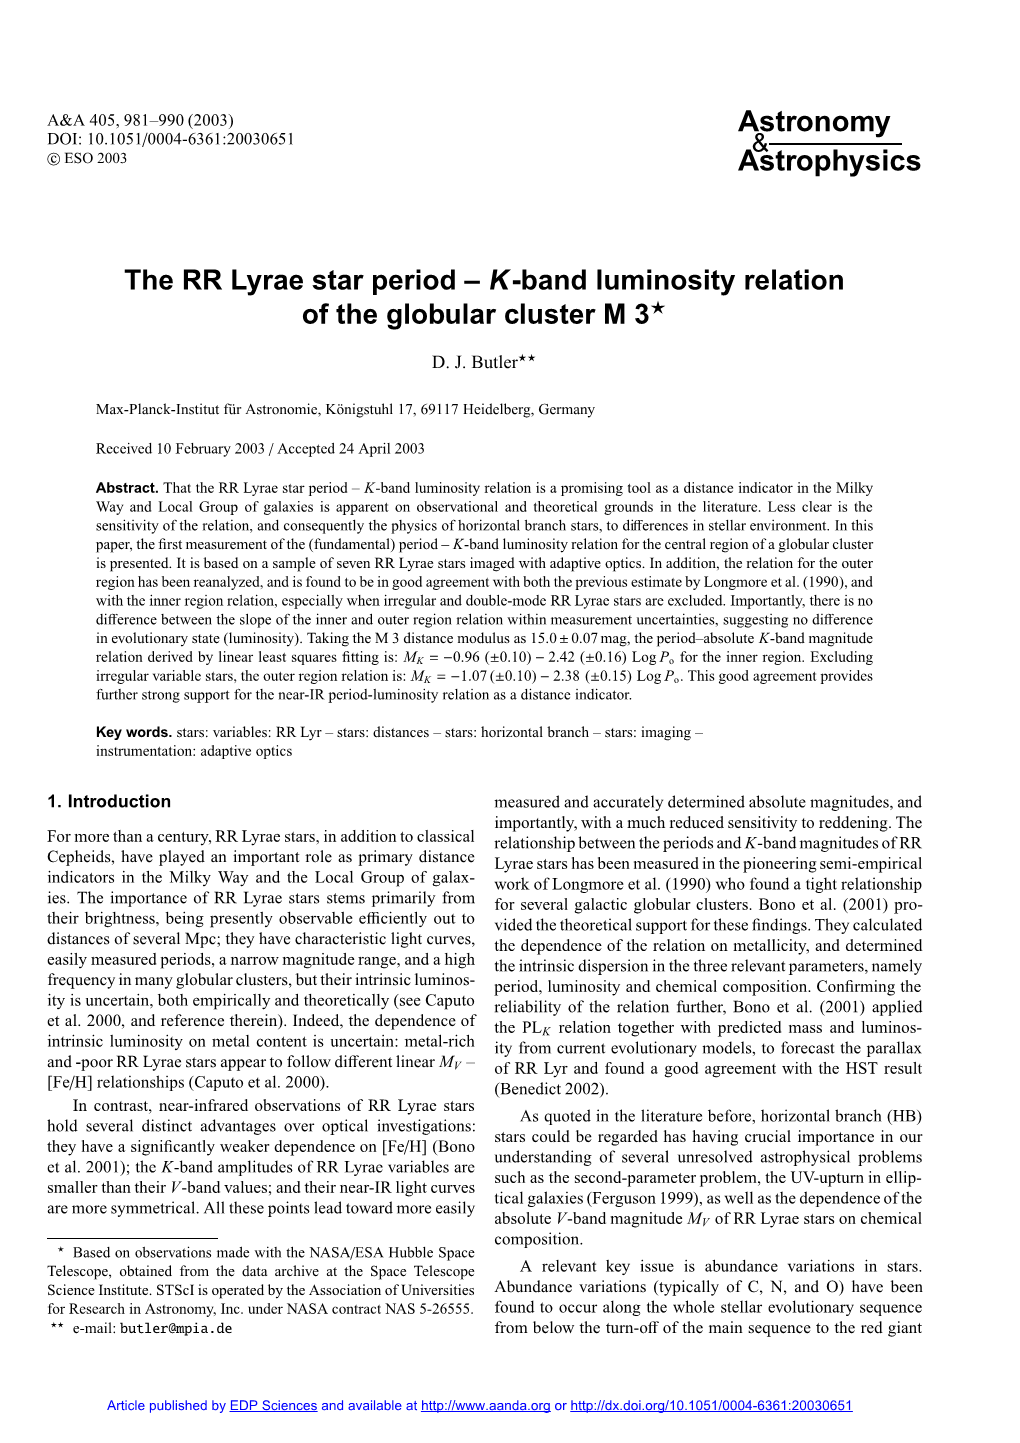 The RR Lyrae Star Period – K-Band Luminosity Relation of the Globular Cluster M 3?